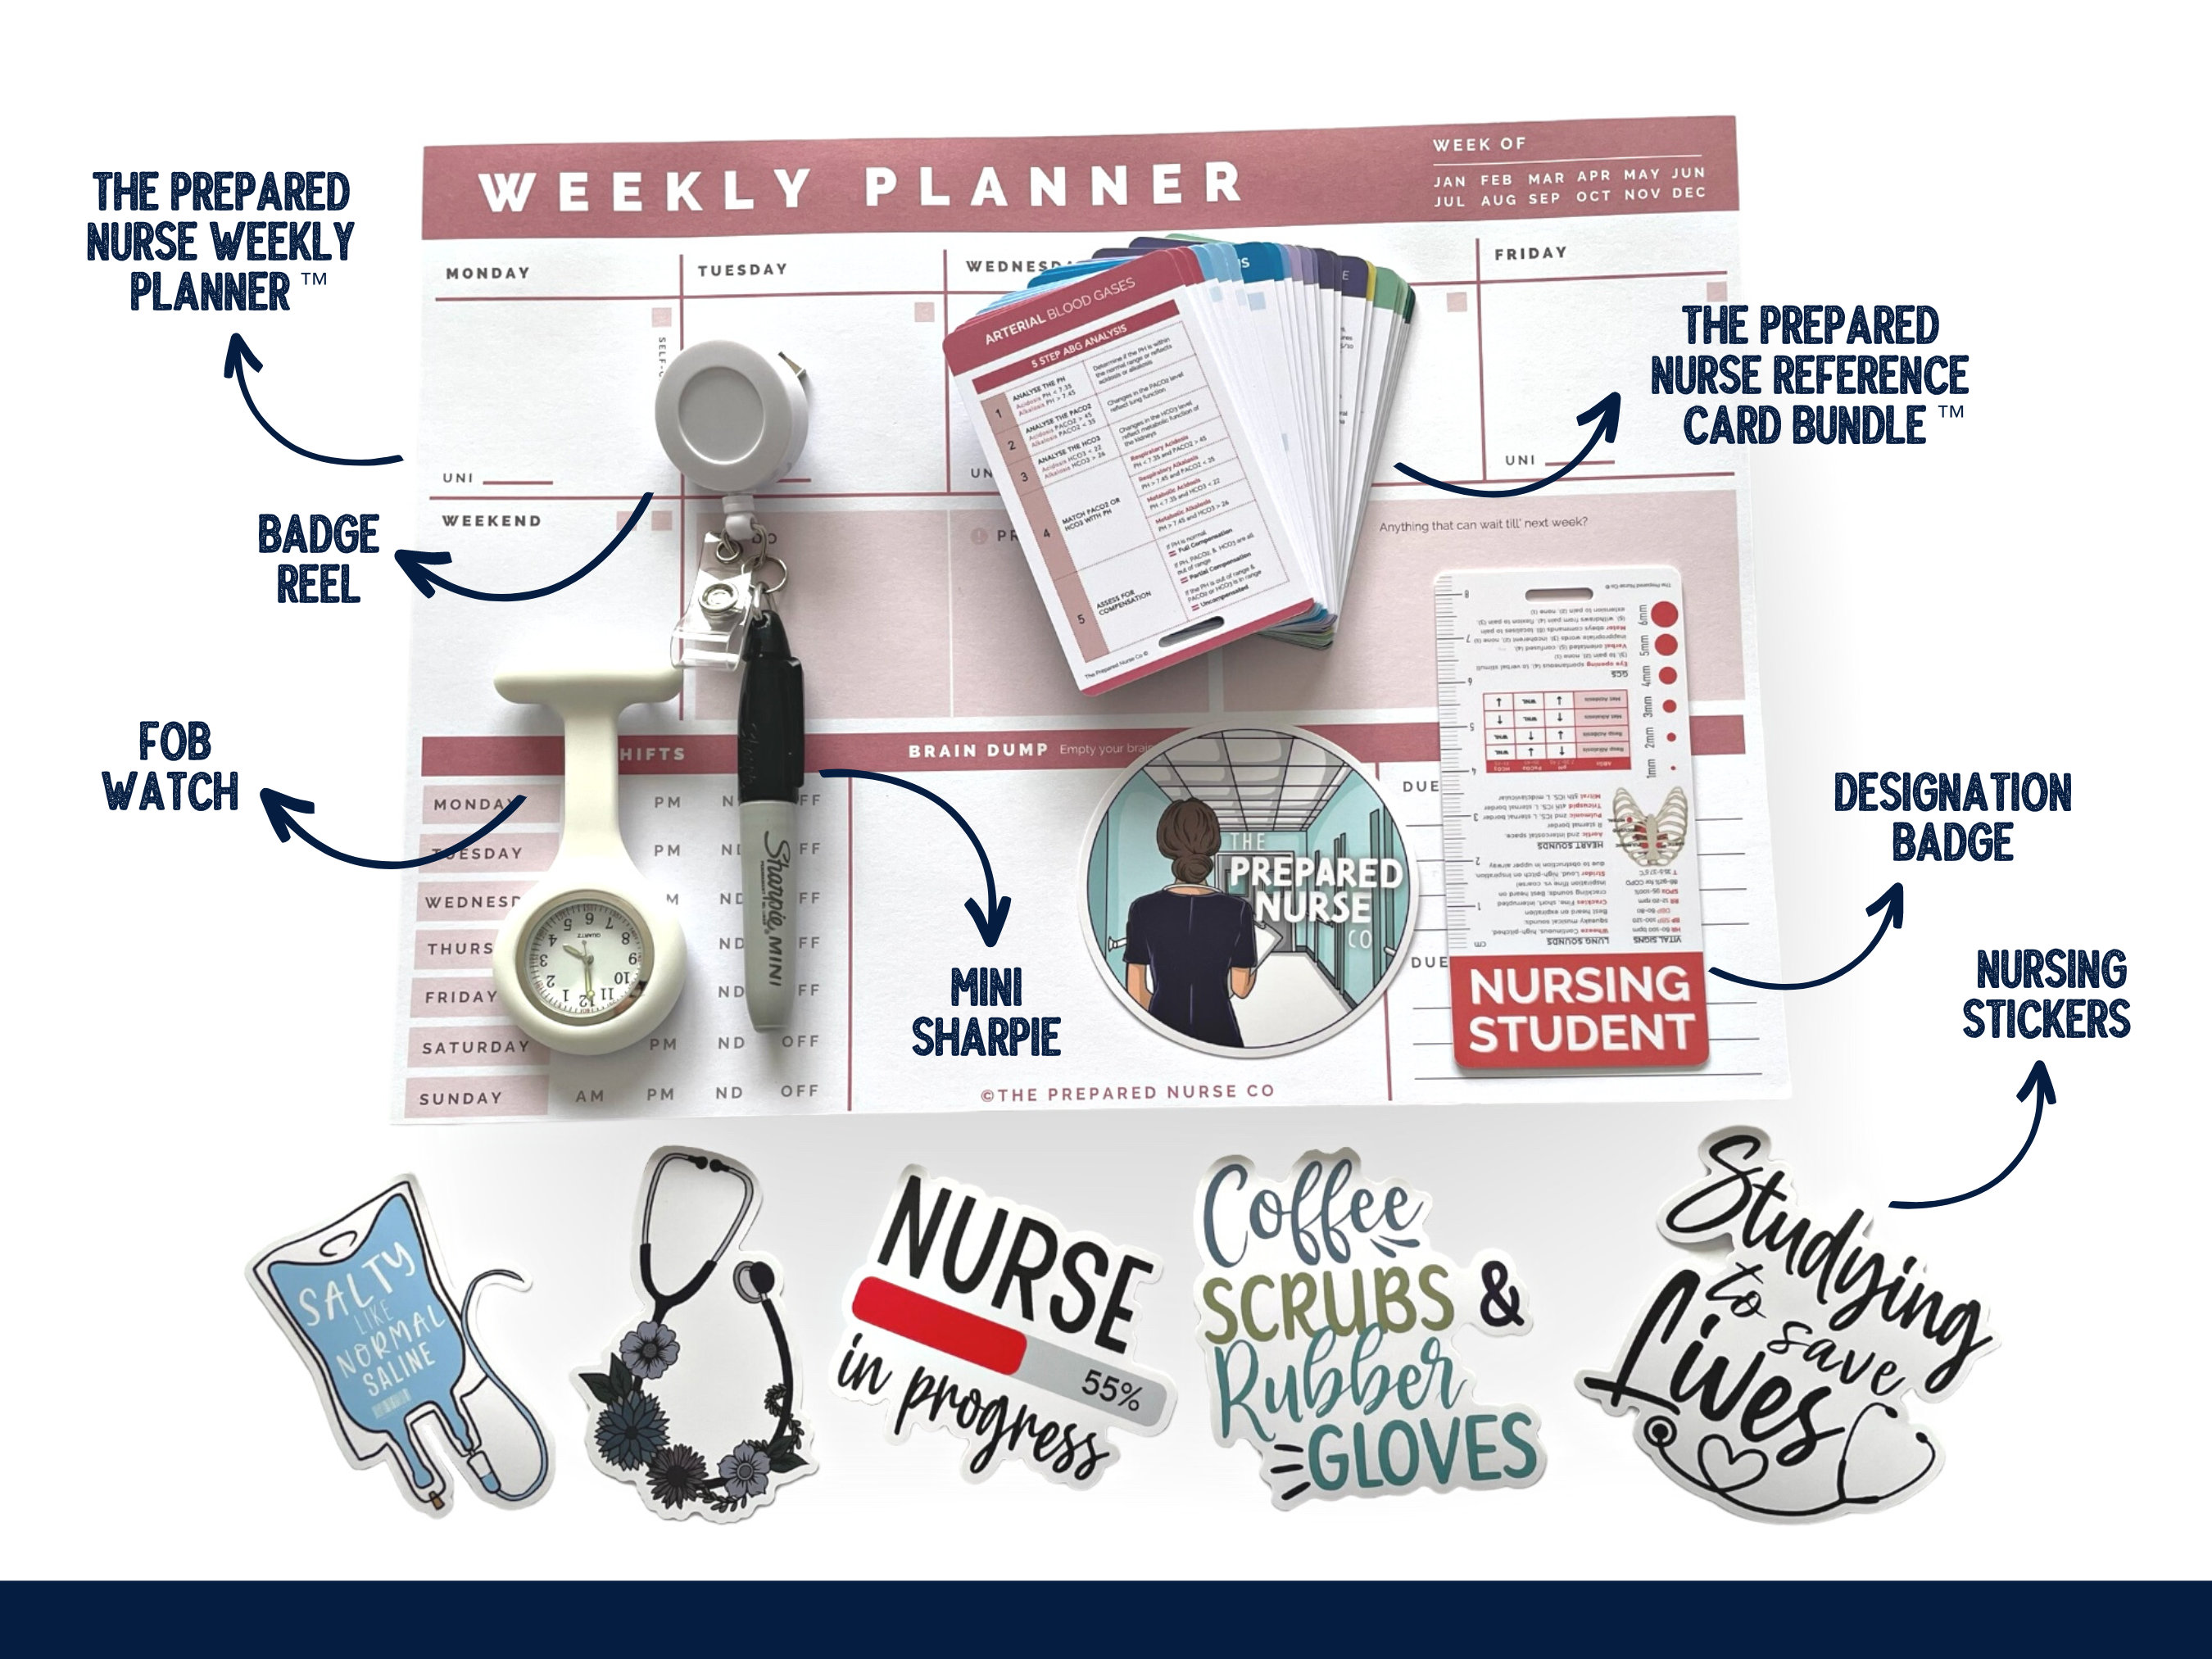 The Prepared Nurse Complete Bundle ™ Nursing Reference Cards